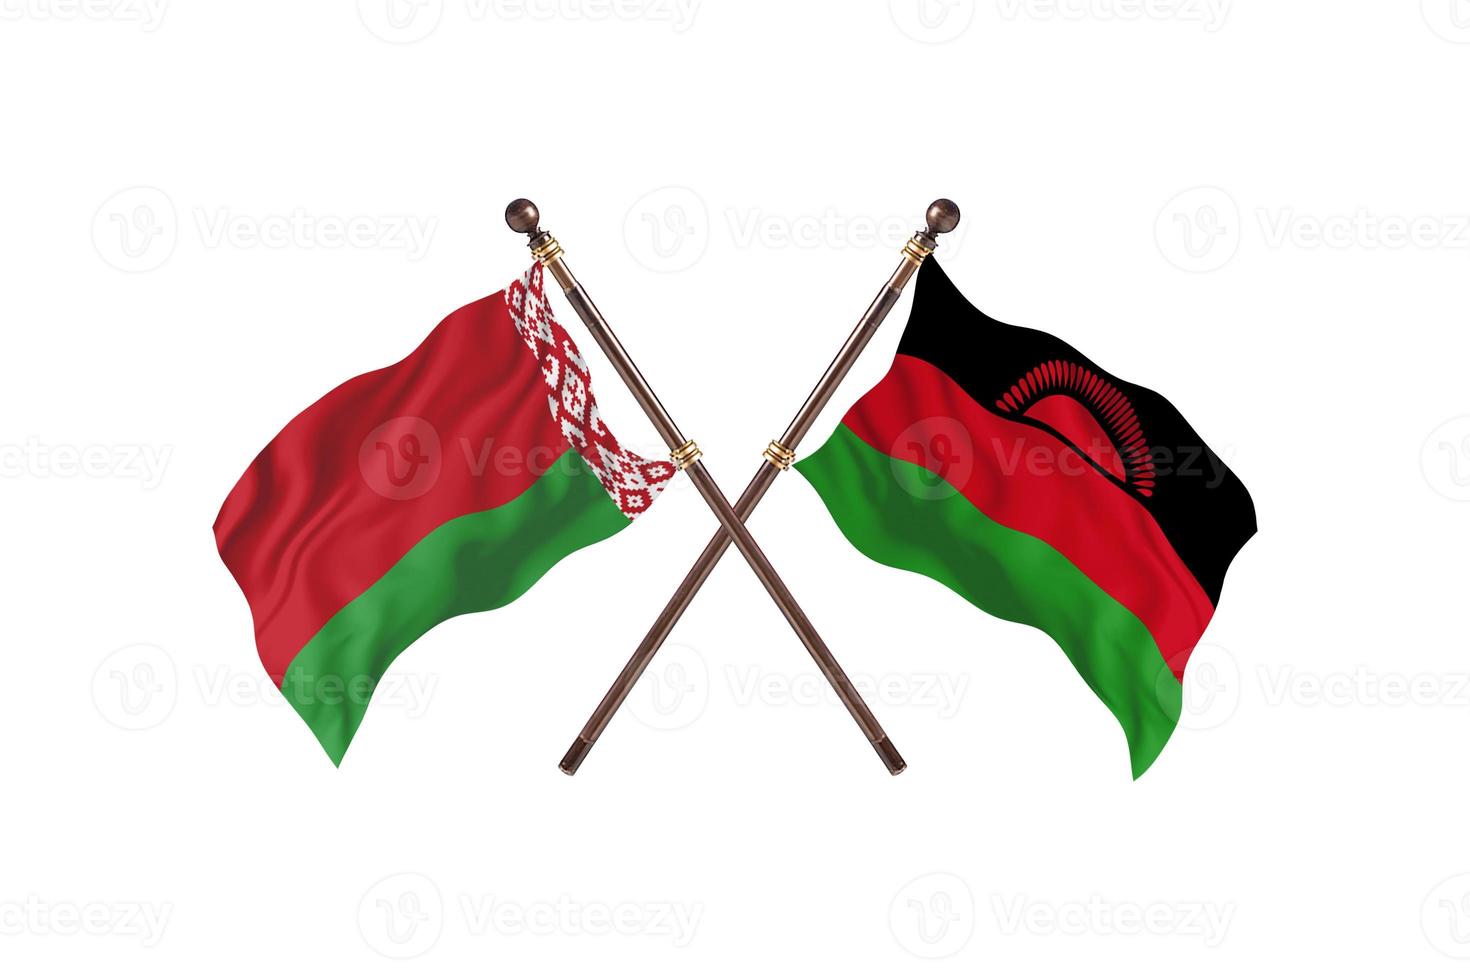 Vitryssland mot malawi två Land flaggor foto